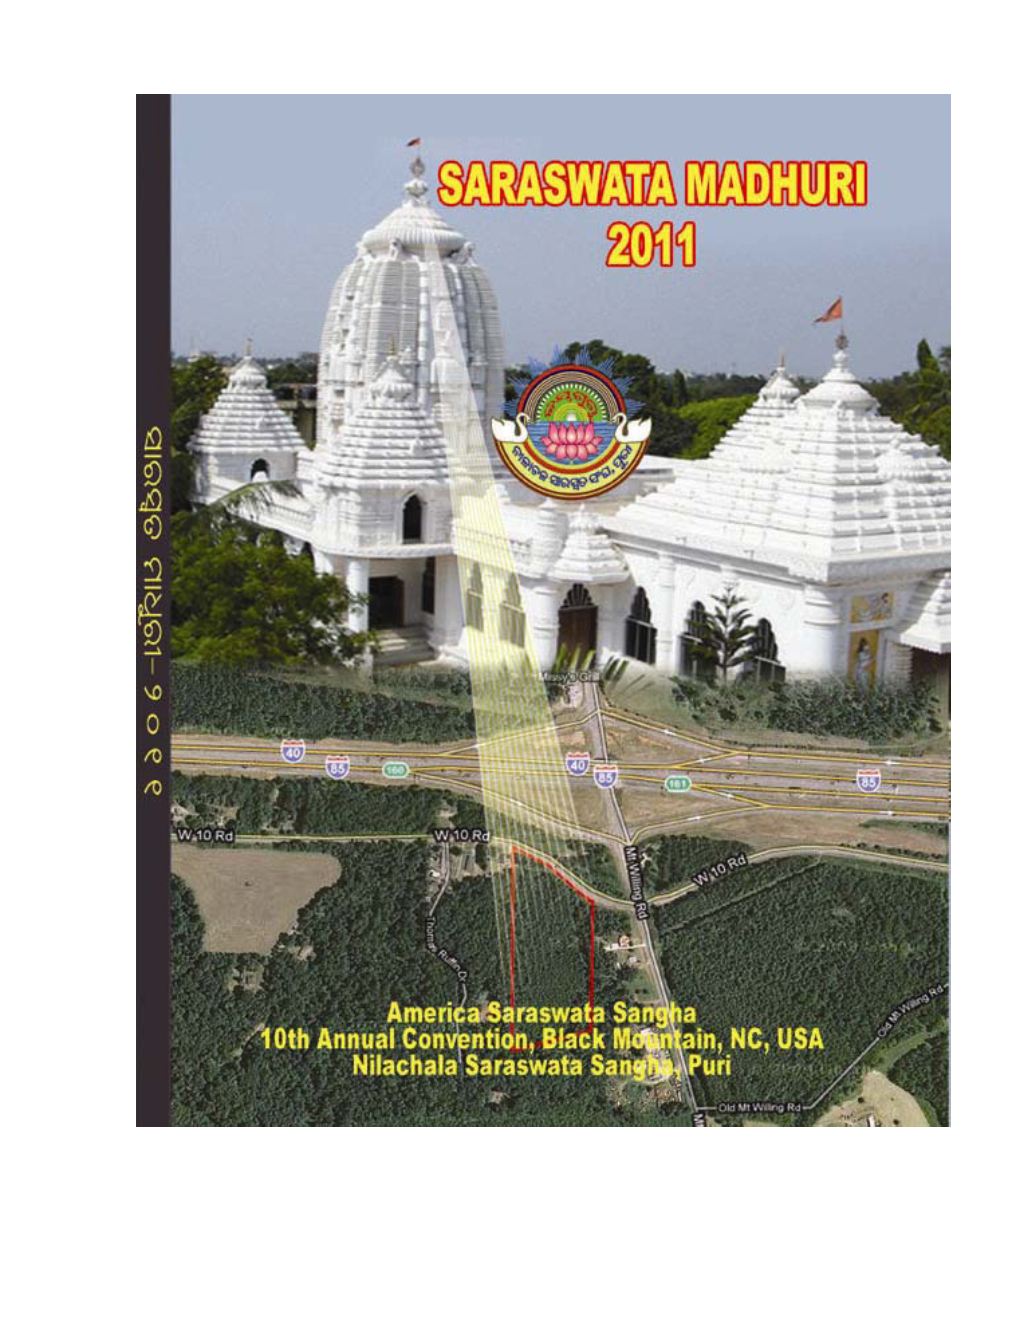 Significant Events of Nilachala Saraswata Sangha